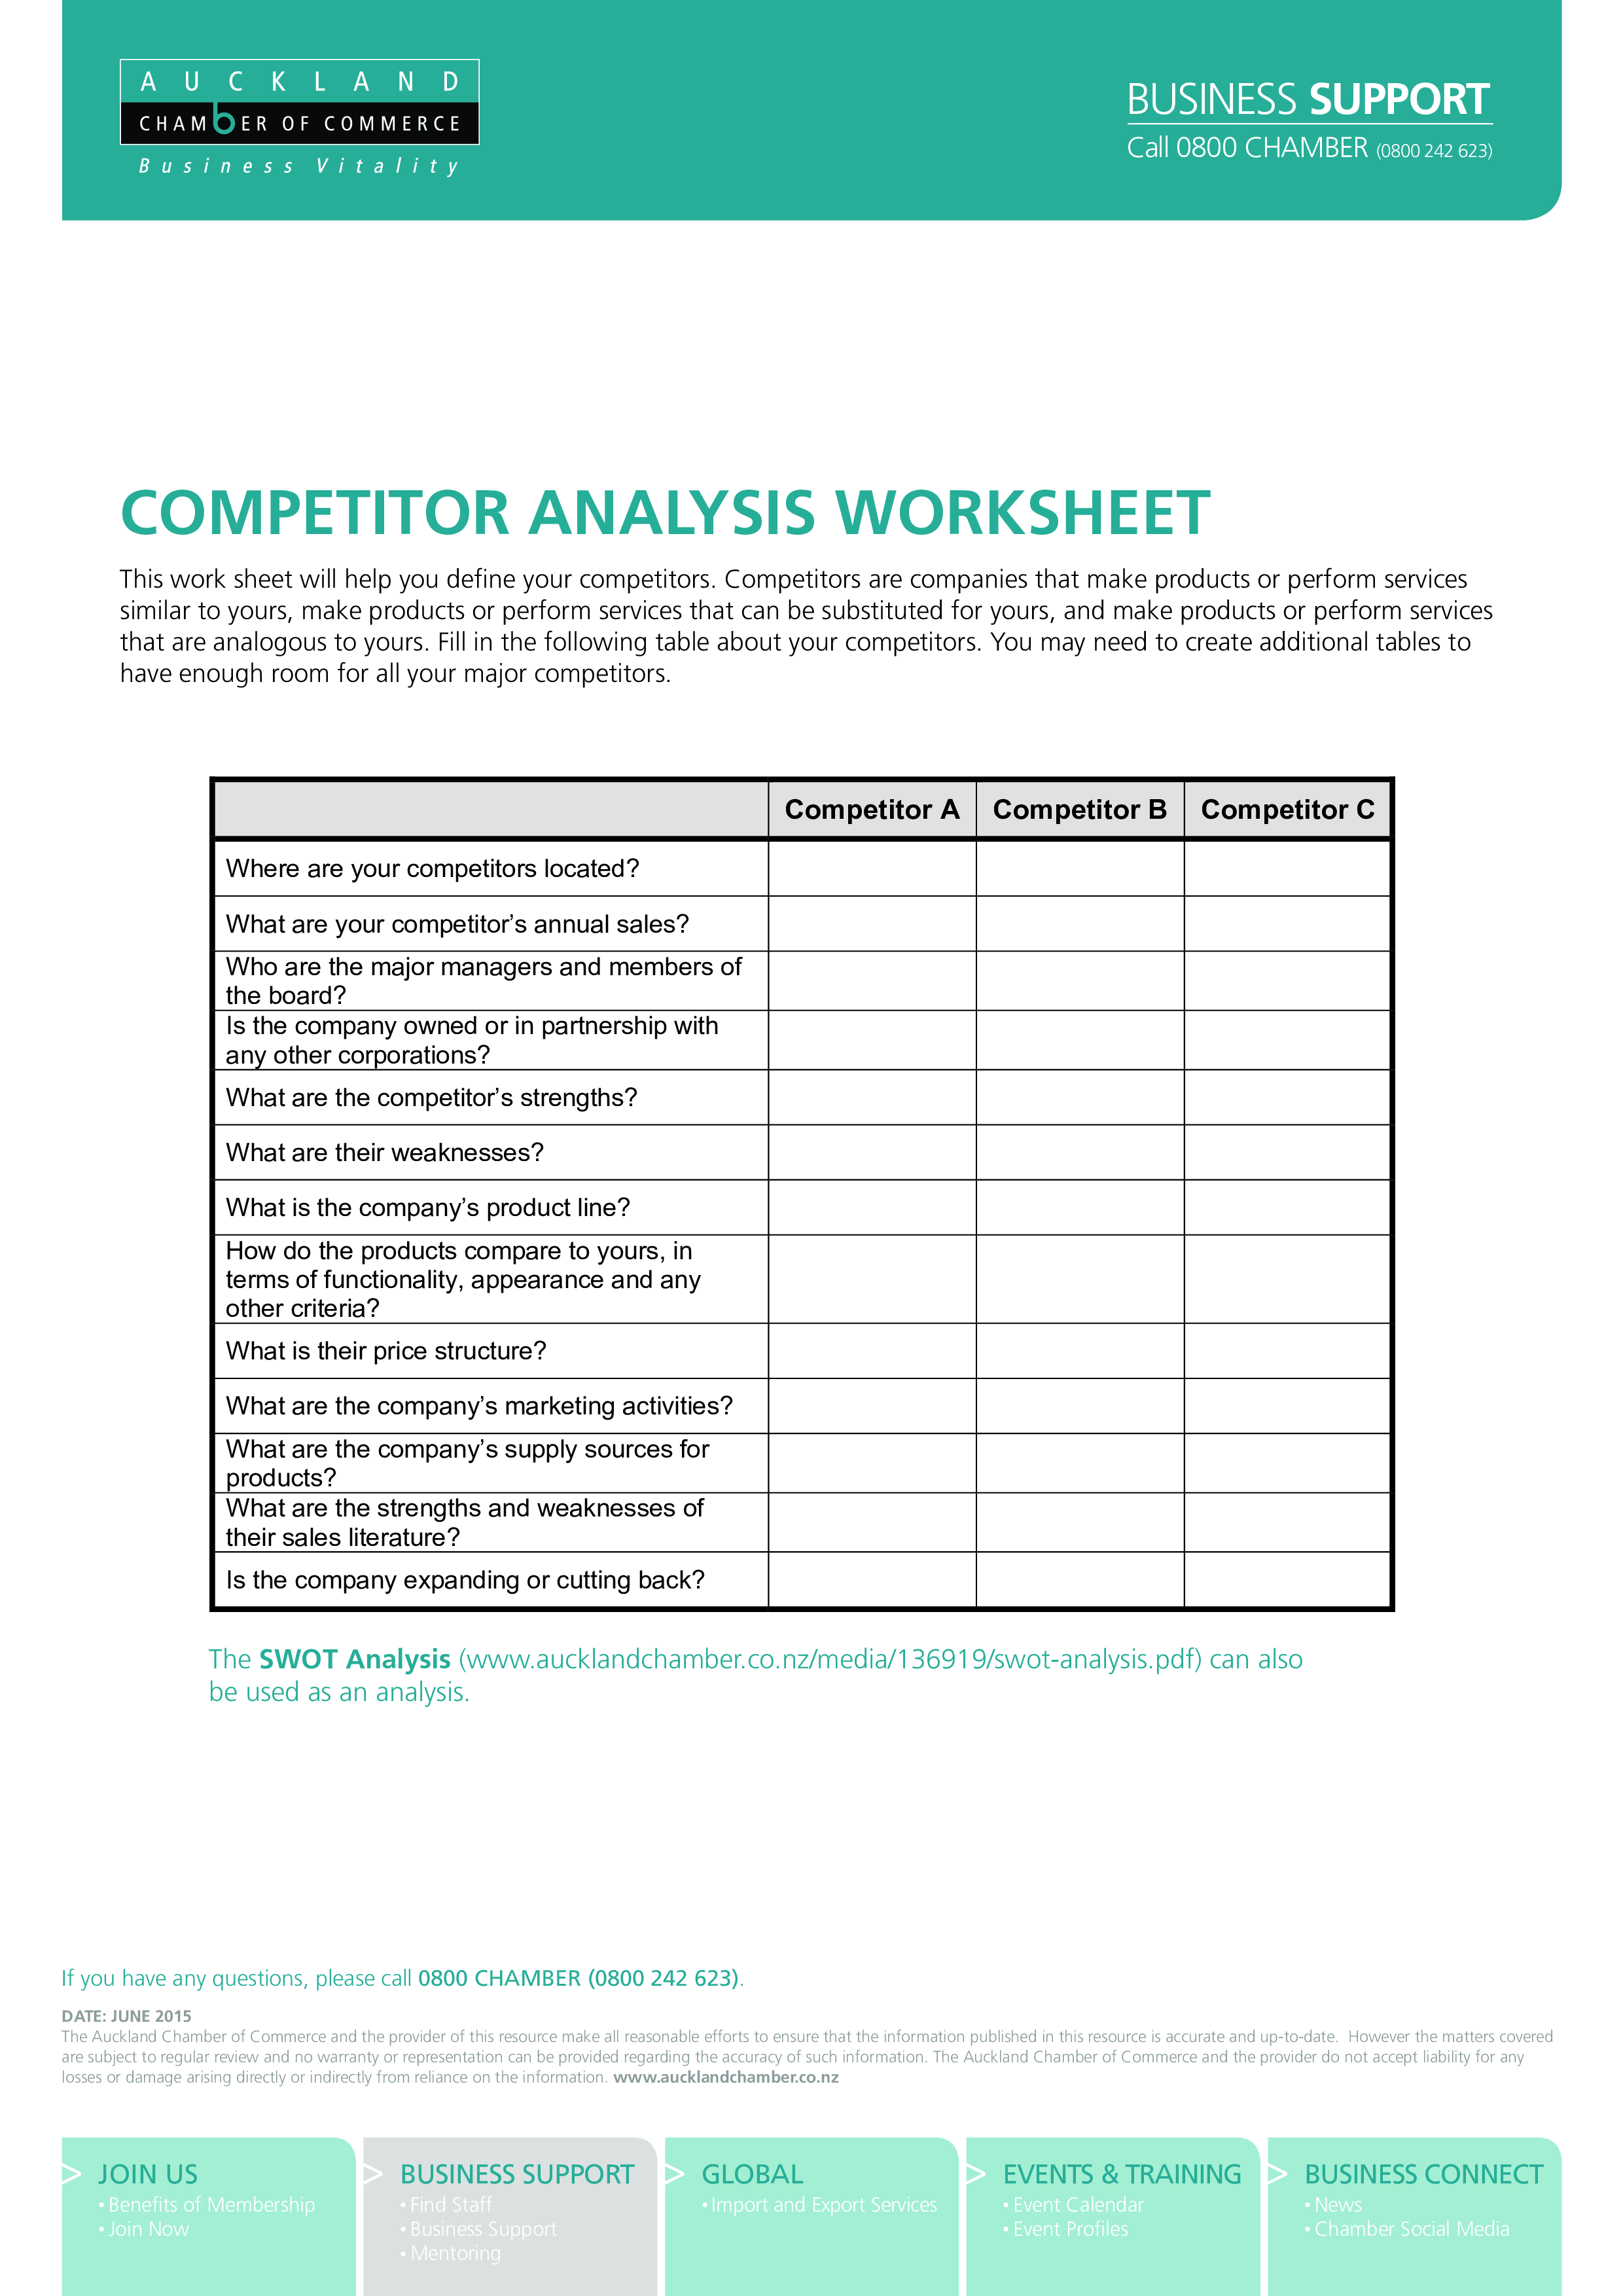 Competitor Analysis Worksheet Templates At Allbusinesstemplates